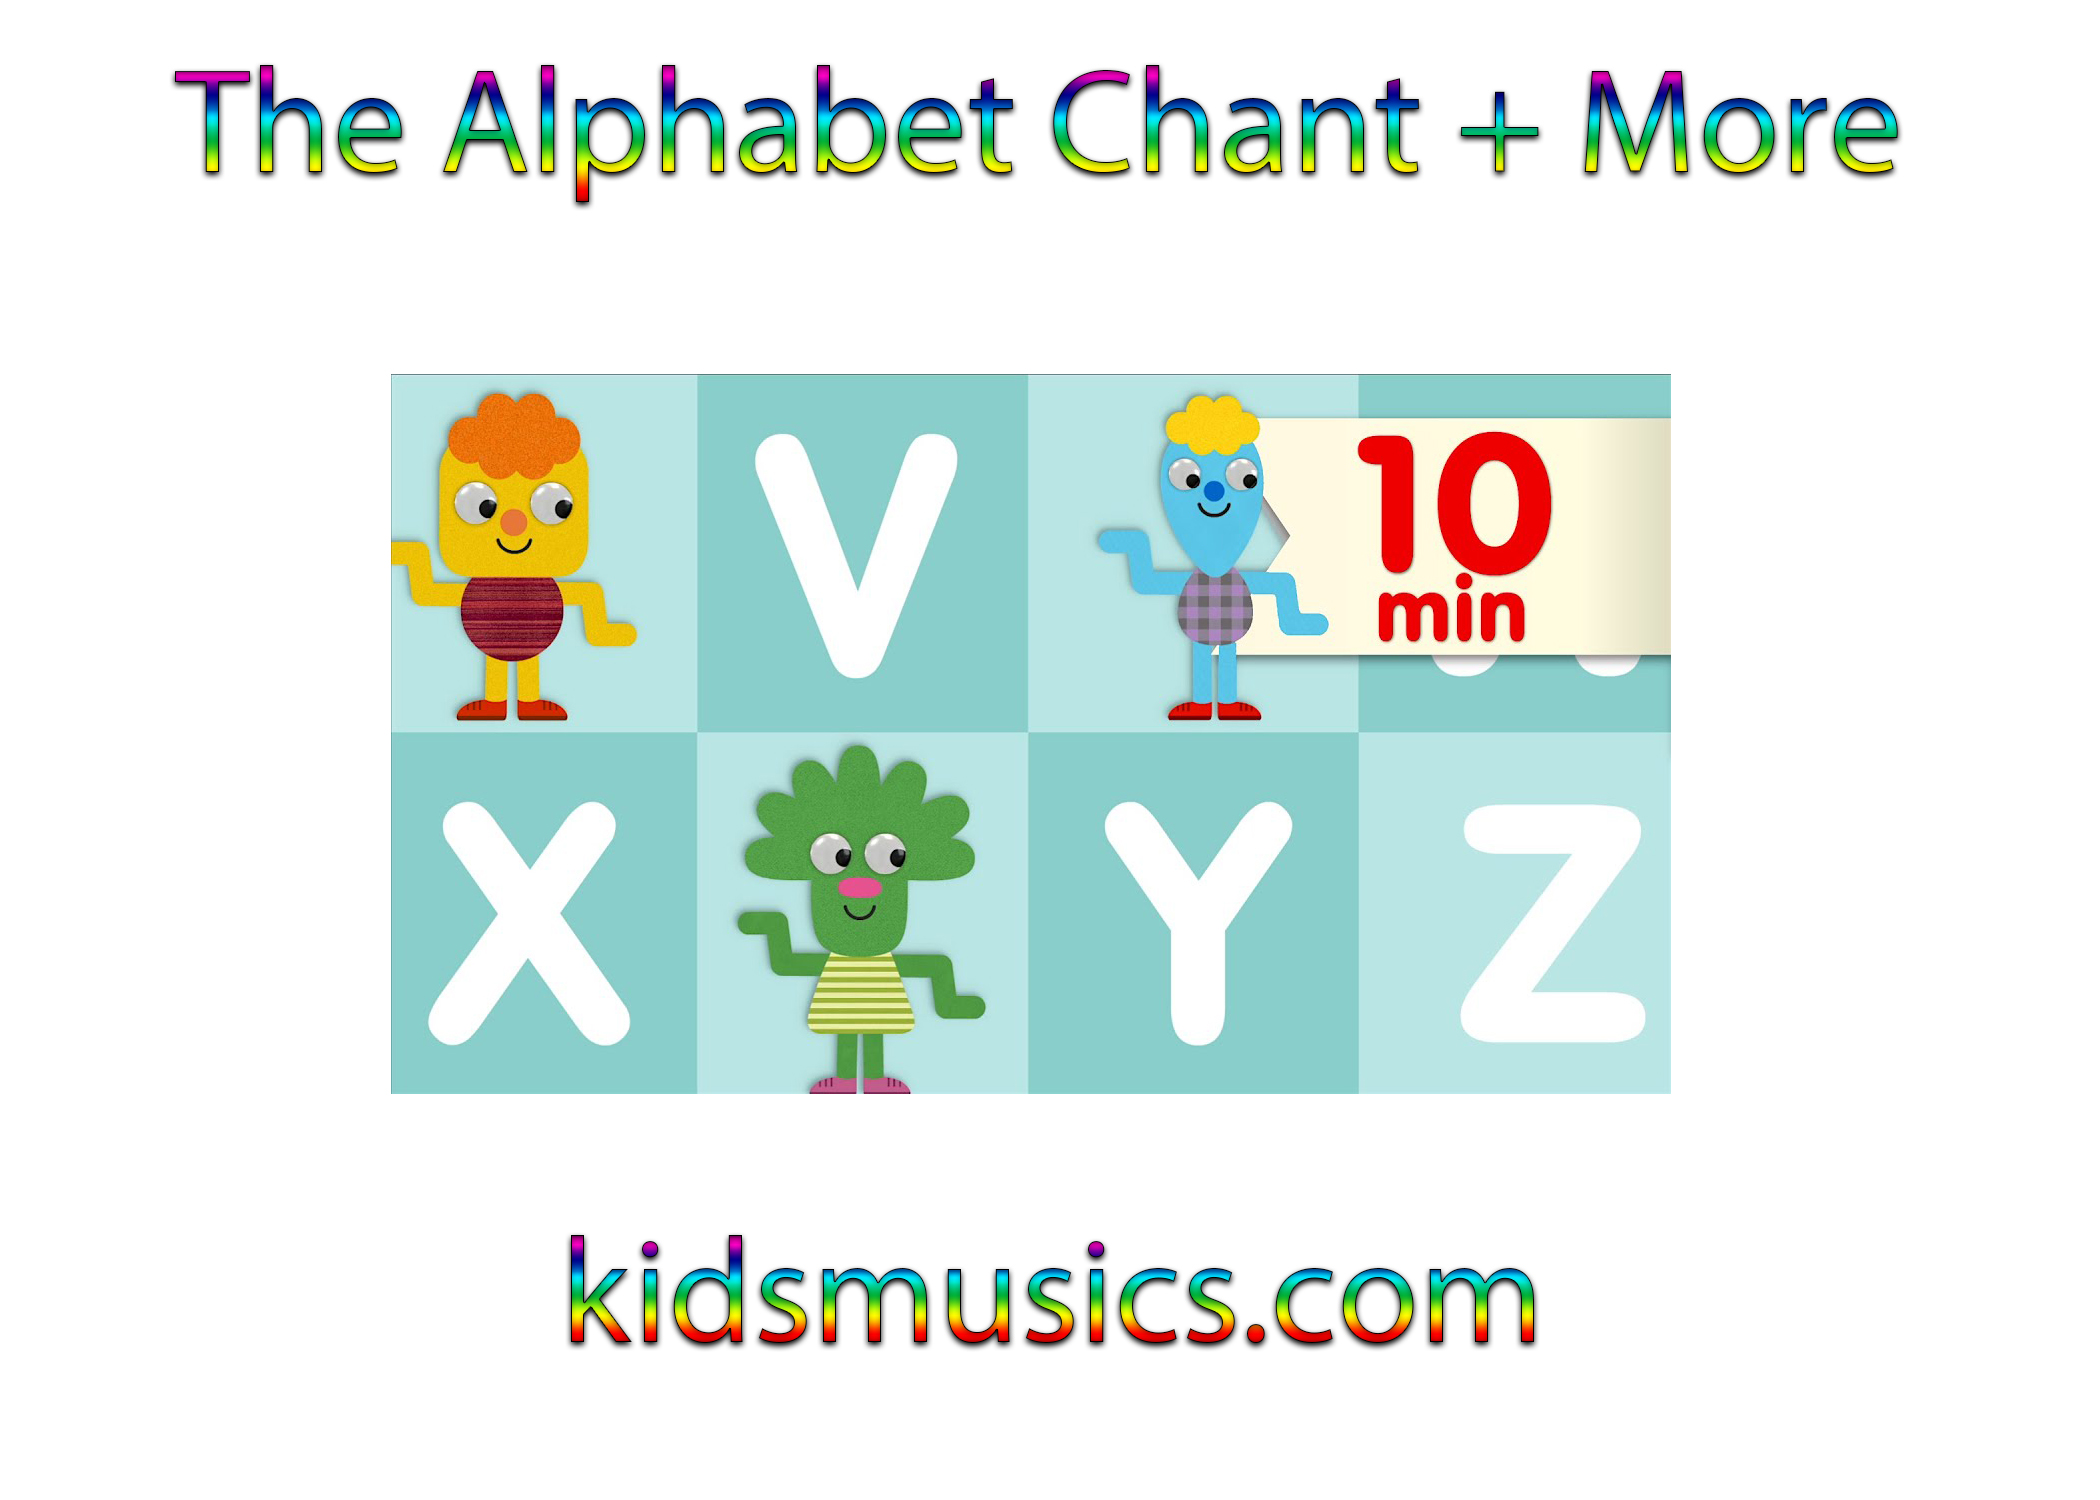 The Alphabet Chant + More